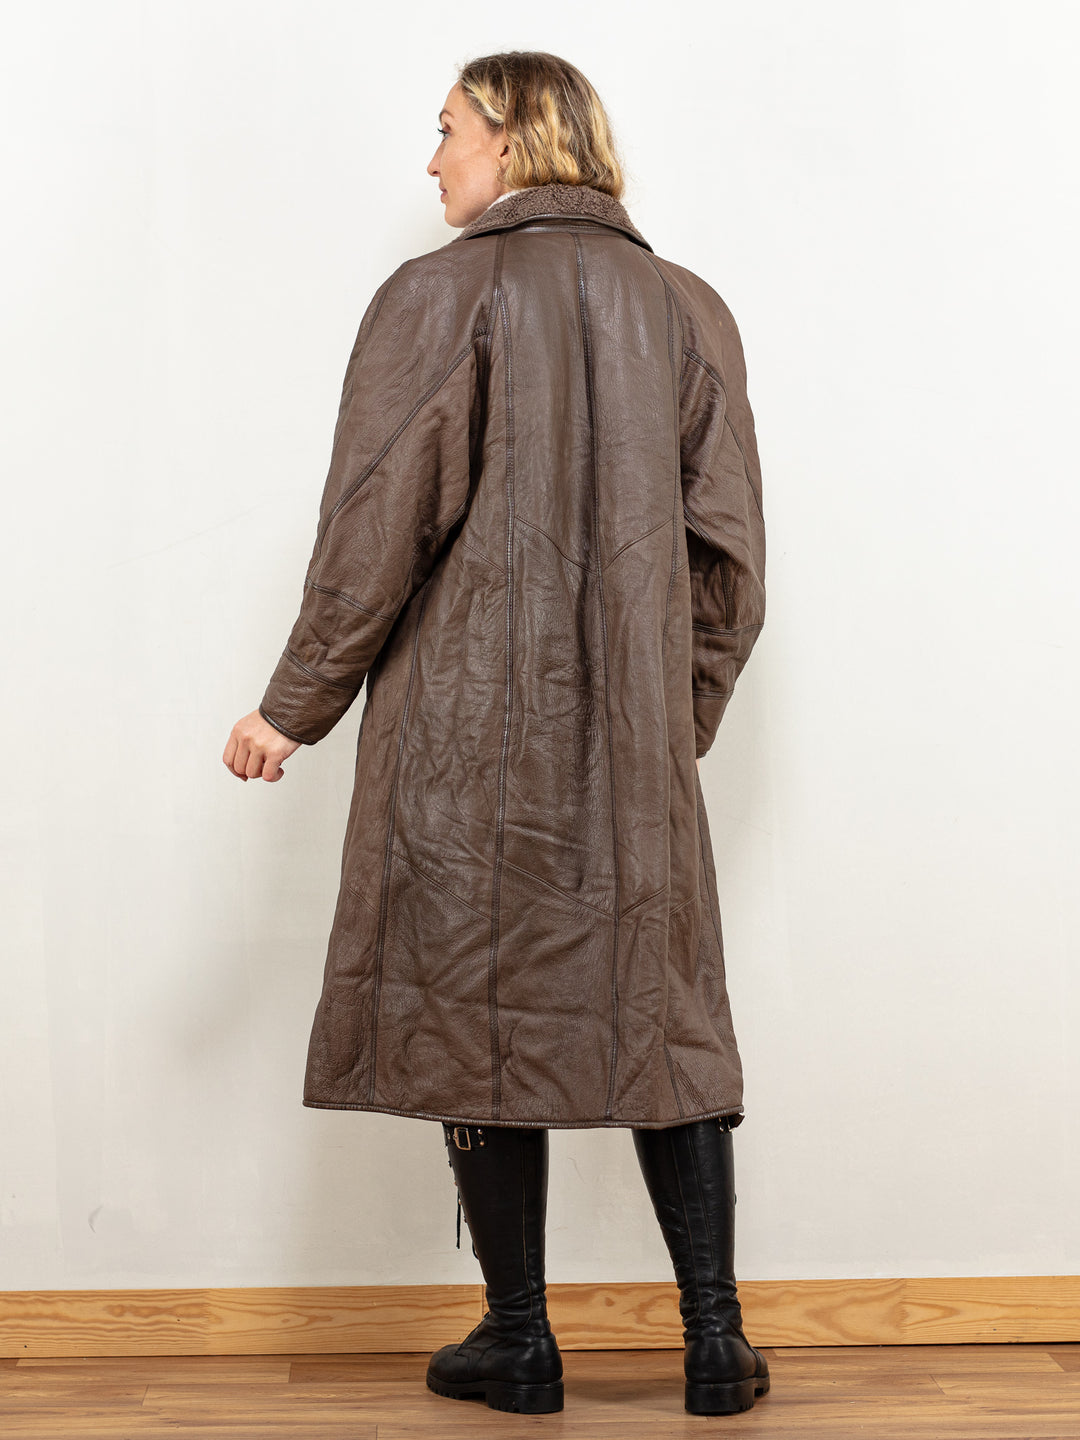 Leather Sheepskin Coat vintage 70's women afghan Penny Lane shearling brown leather winter longline coat oversized vintage style size large